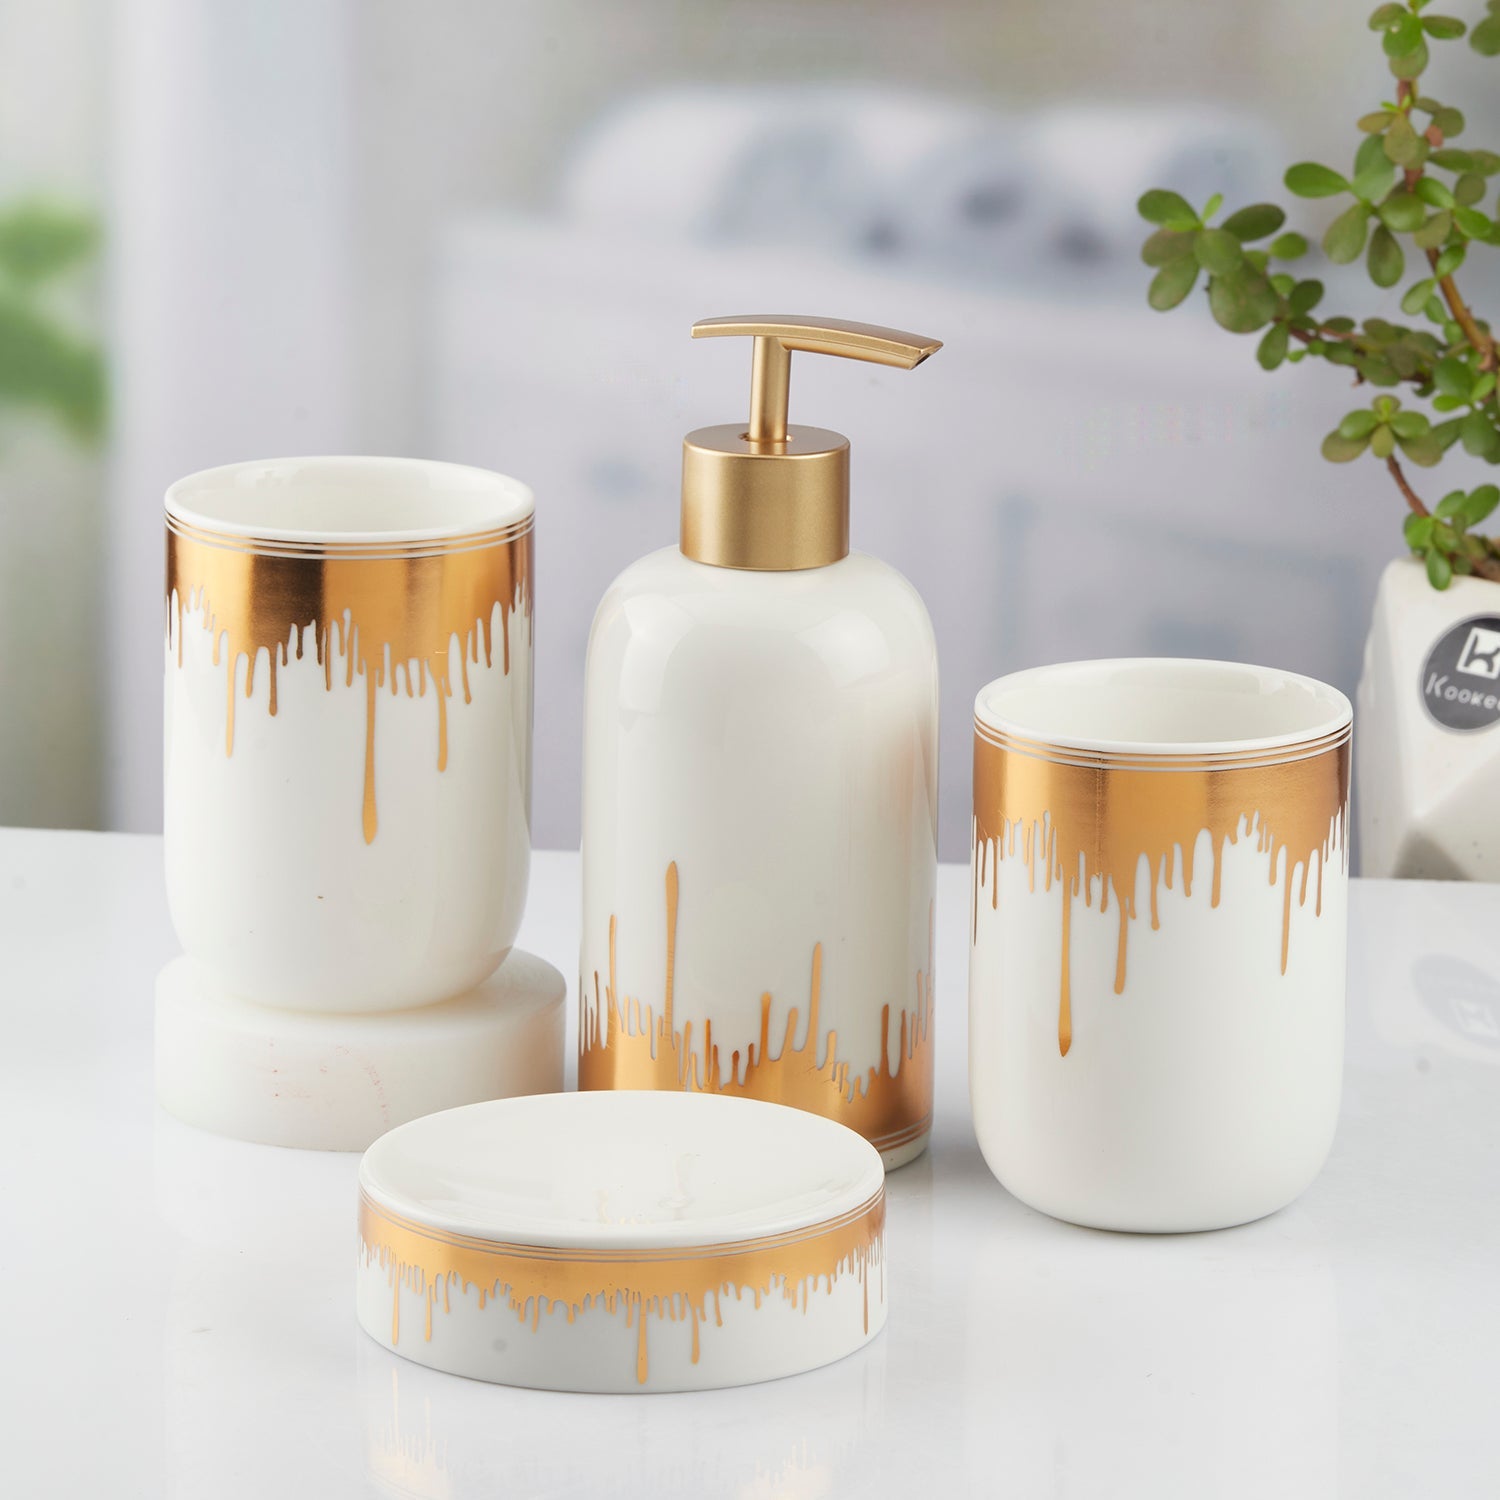 Ceramic Bathroom Accessories Set of 4 Bath Set with Soap Dispenser (9738)